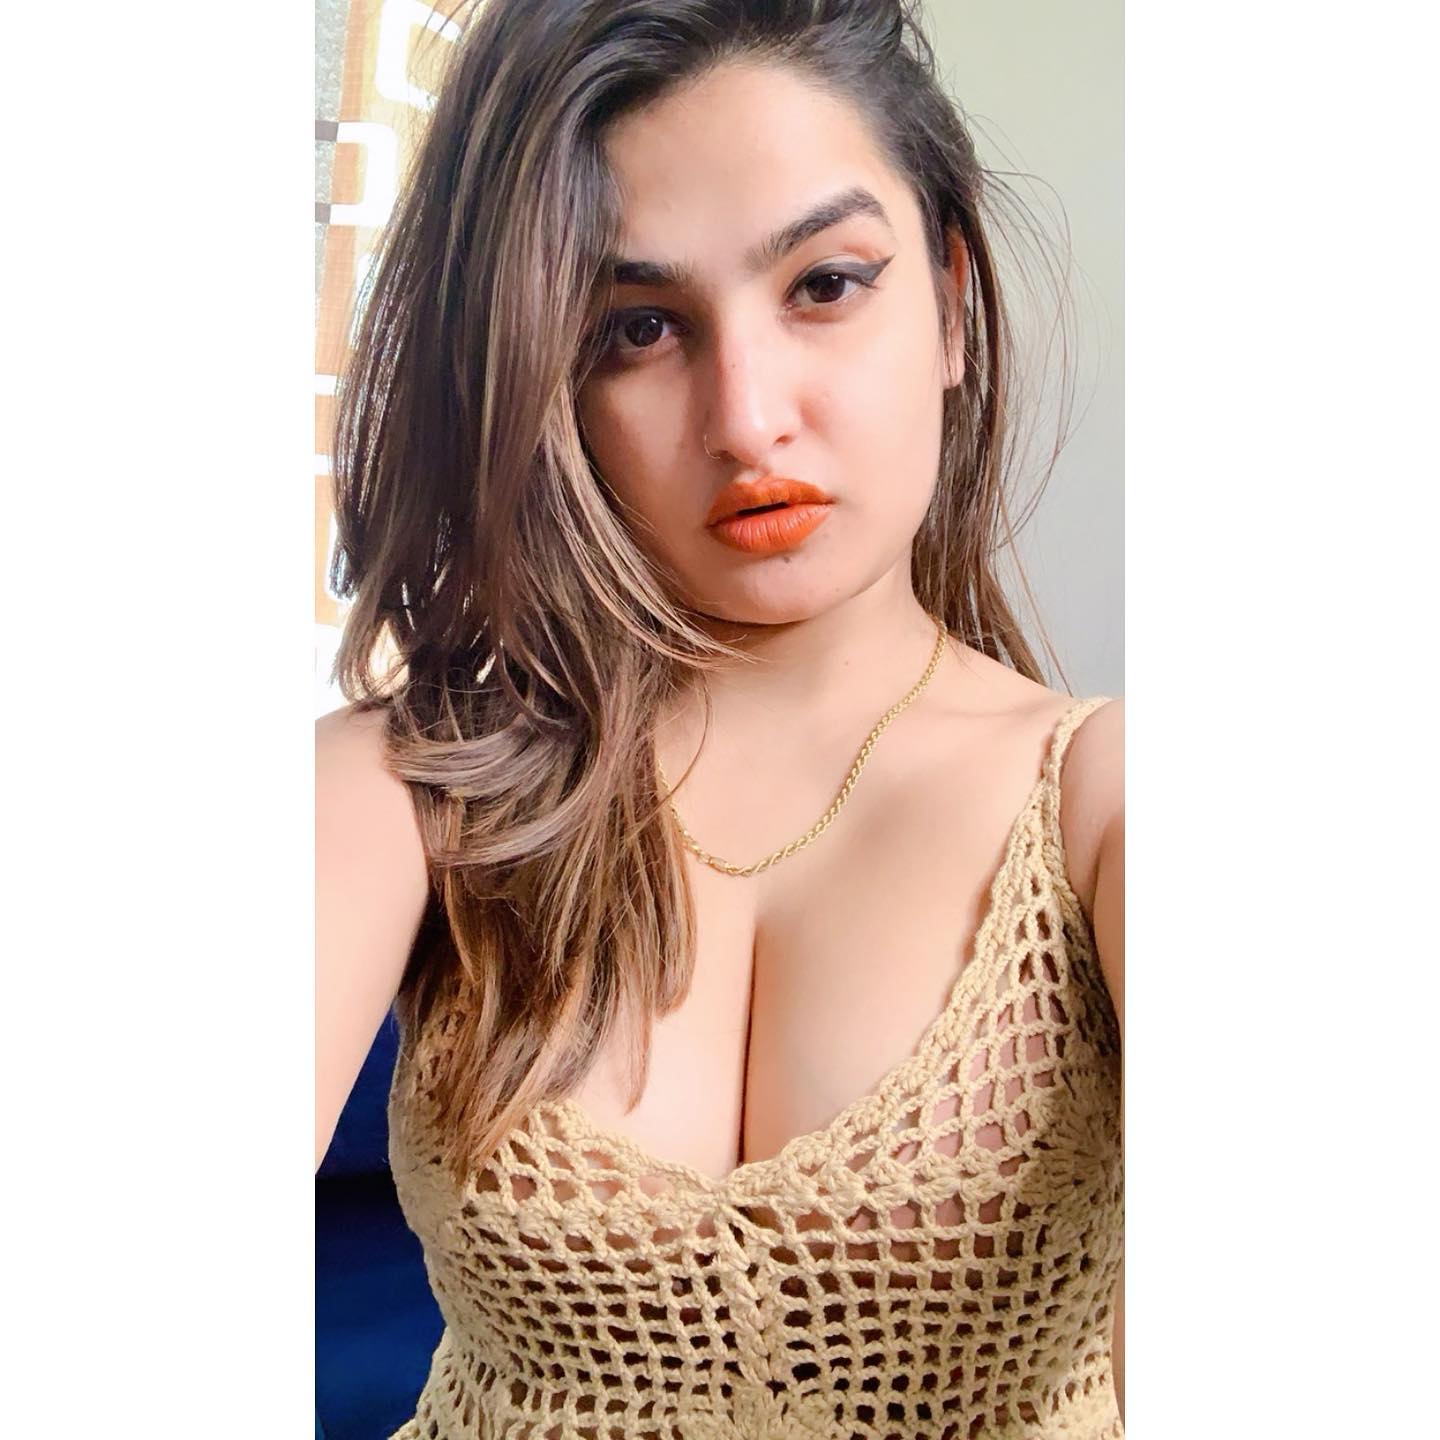 Exotic Actress HD Photos GIF on X: "Hot Sassy Poonam Instagram Model Pic #SassyPoonam #SofiaAnsari #bollywoodactress https://t.co/4r3ZcJ5H6k" / X